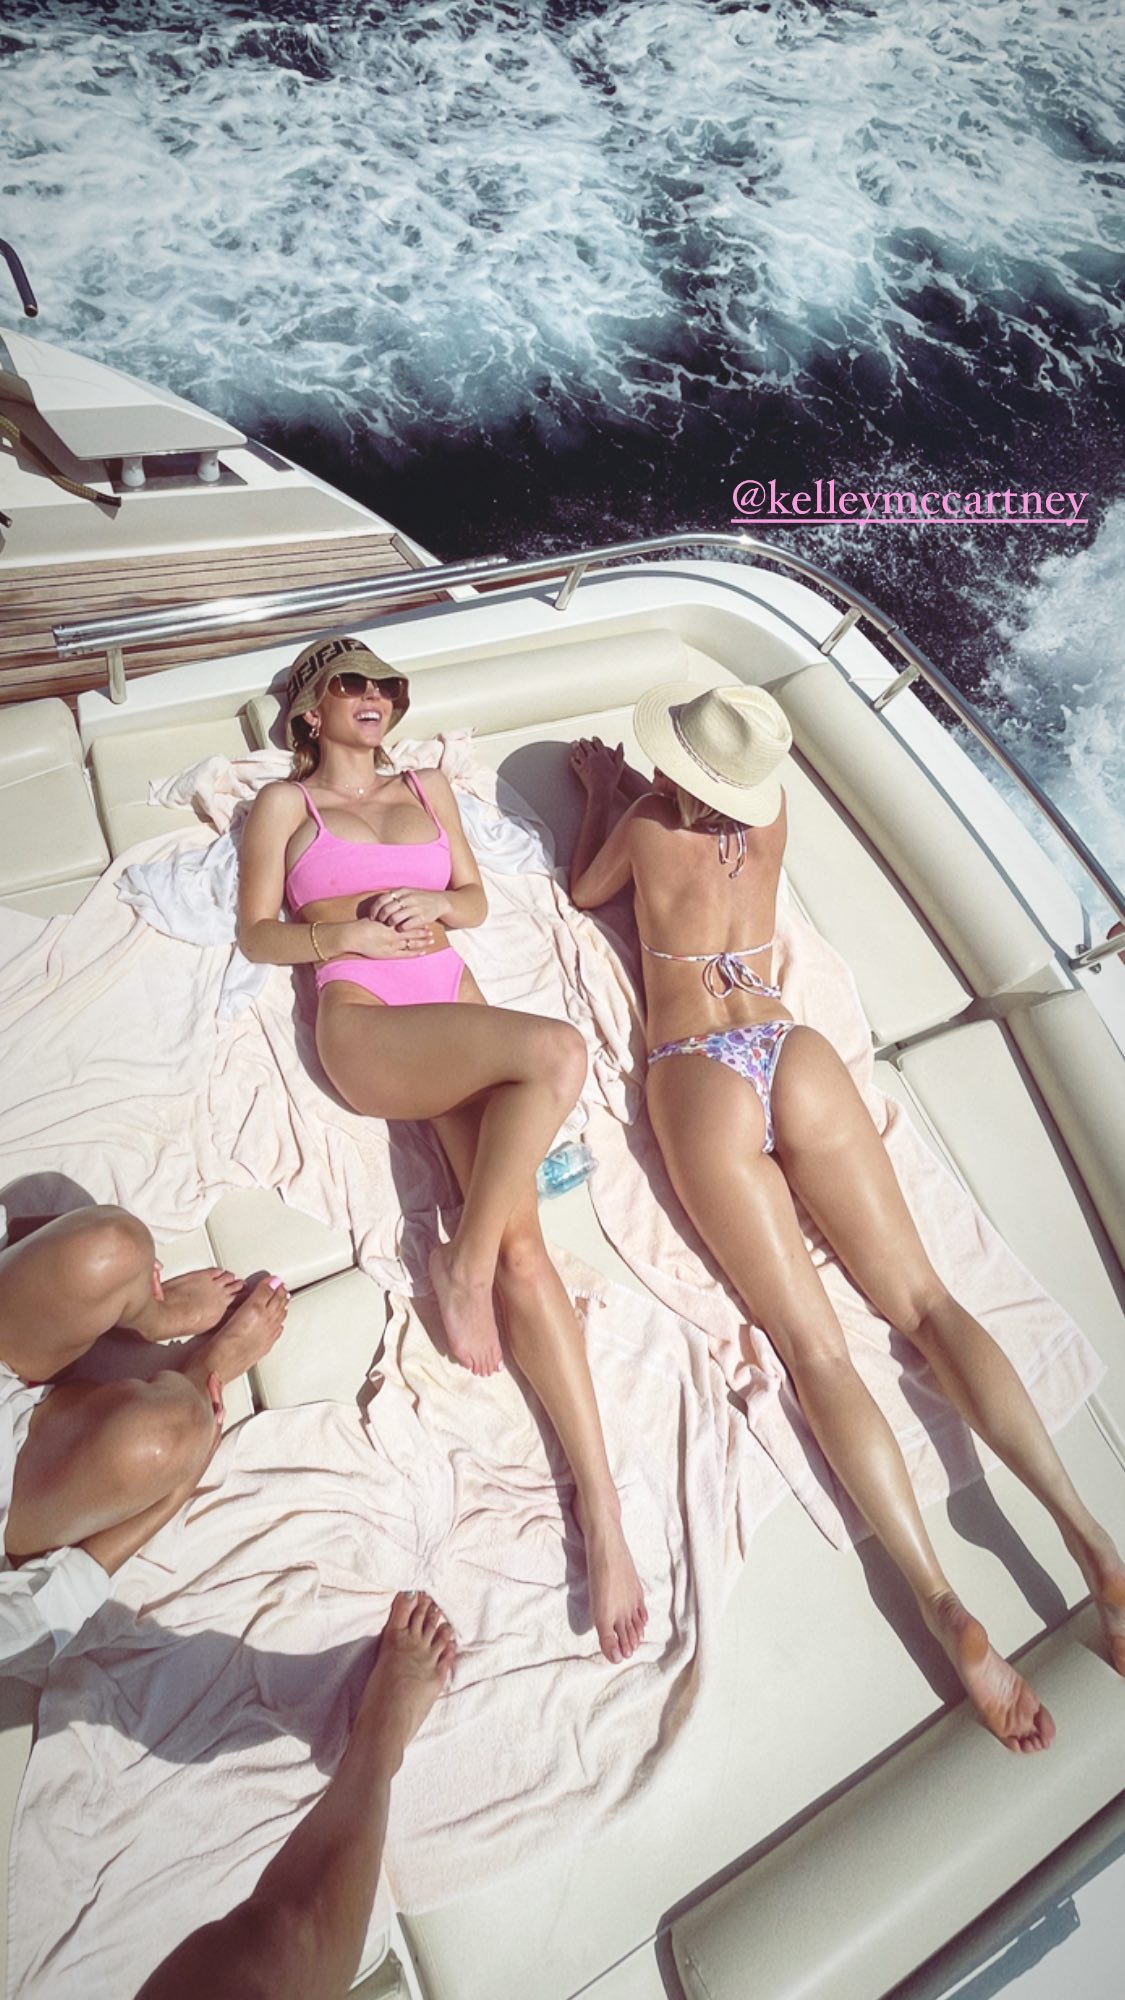 Sydney Sweeney Vacations in Ibiza! - Photo 37